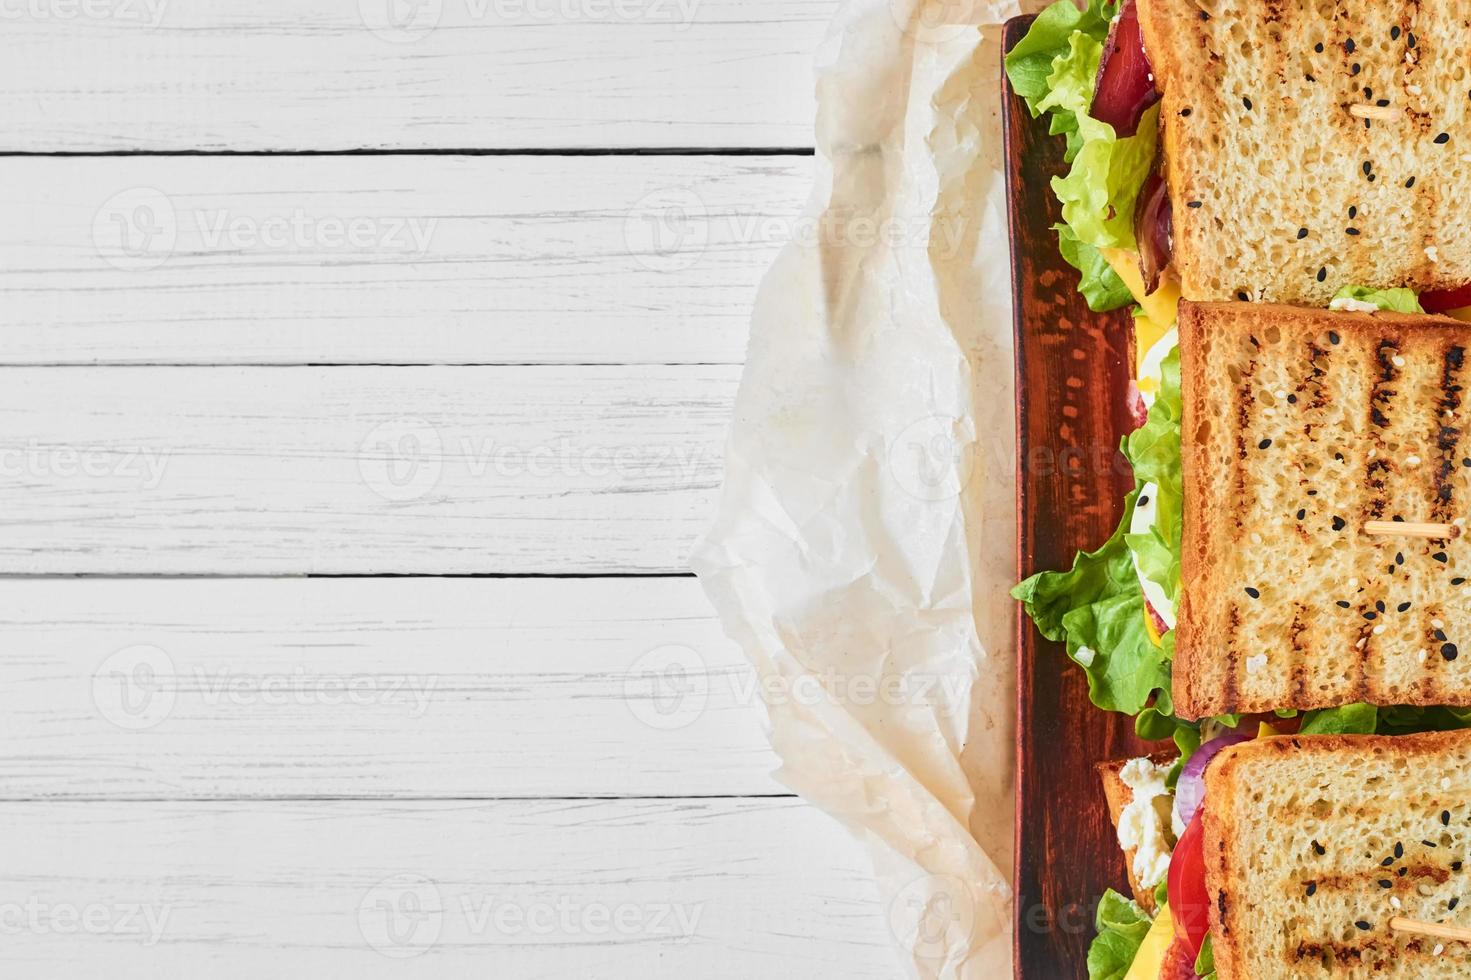 tres sándwiches con jamón, lechuga y verduras frescas sobre un fondo blanco, vista superior con espacio para copiar foto